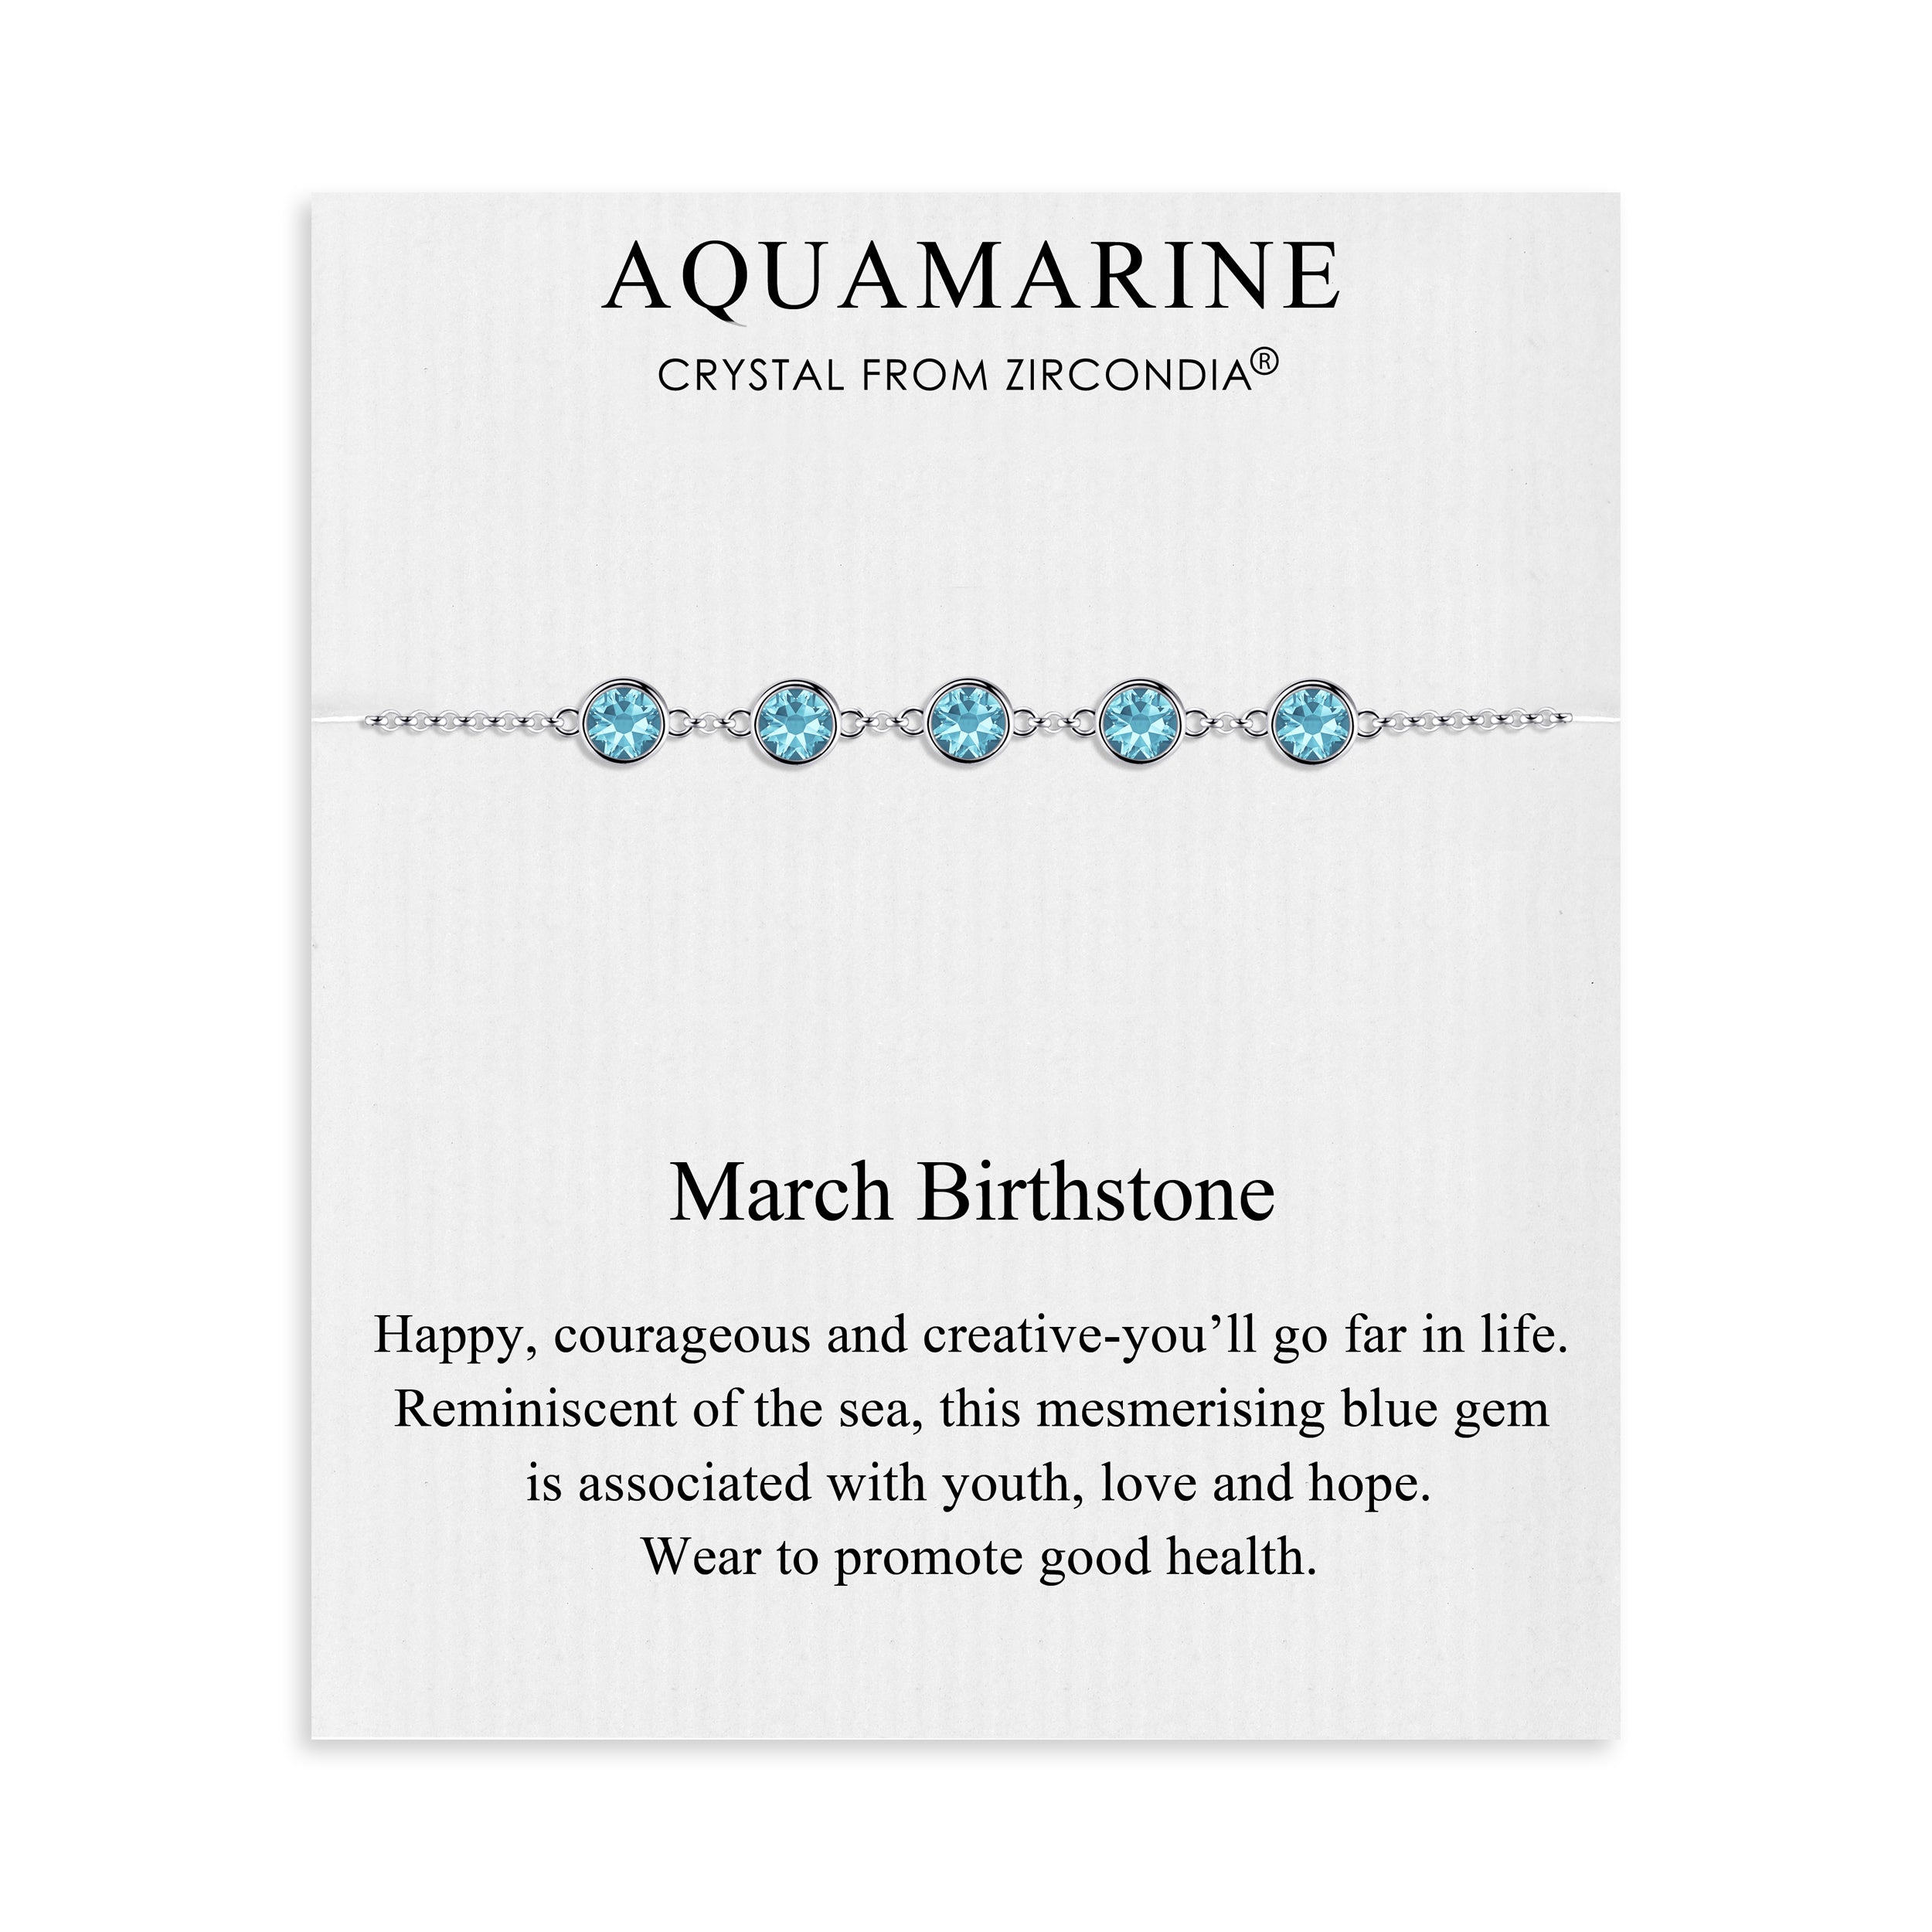 March Birthstone Bracelet Created with Aquamarine Zircondia® Crystals by Philip Jones Jewellery